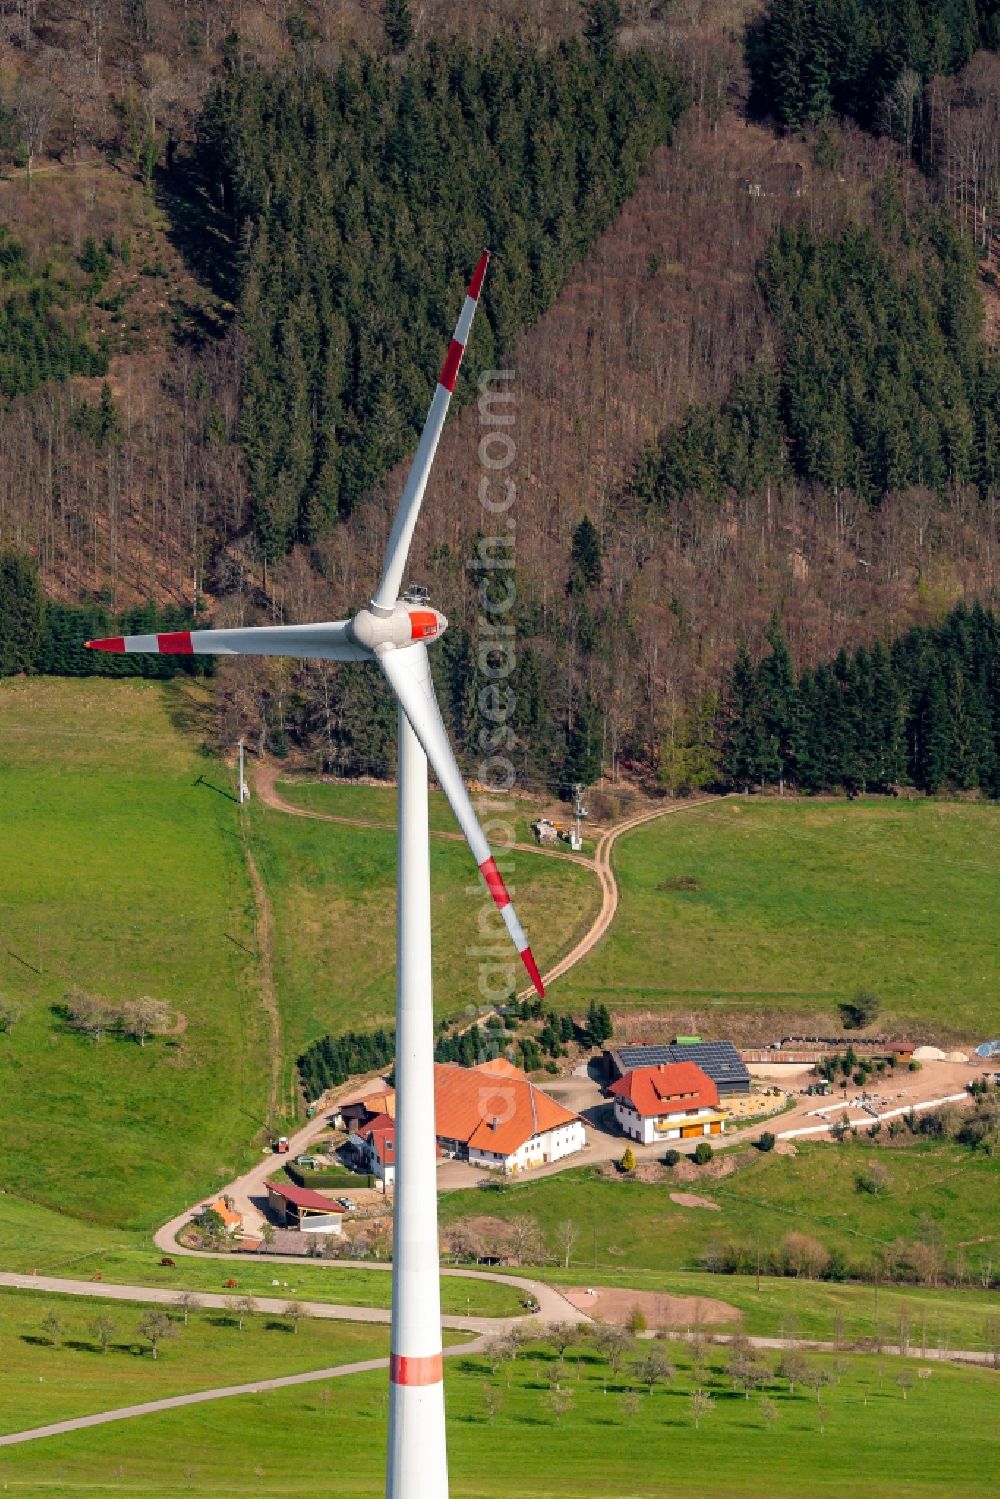 Aerial image Schweighausen - Wind turbine windmills (WEA) in a forest area in Schweighausen in the state Baden-Wuerttemberg, Germany